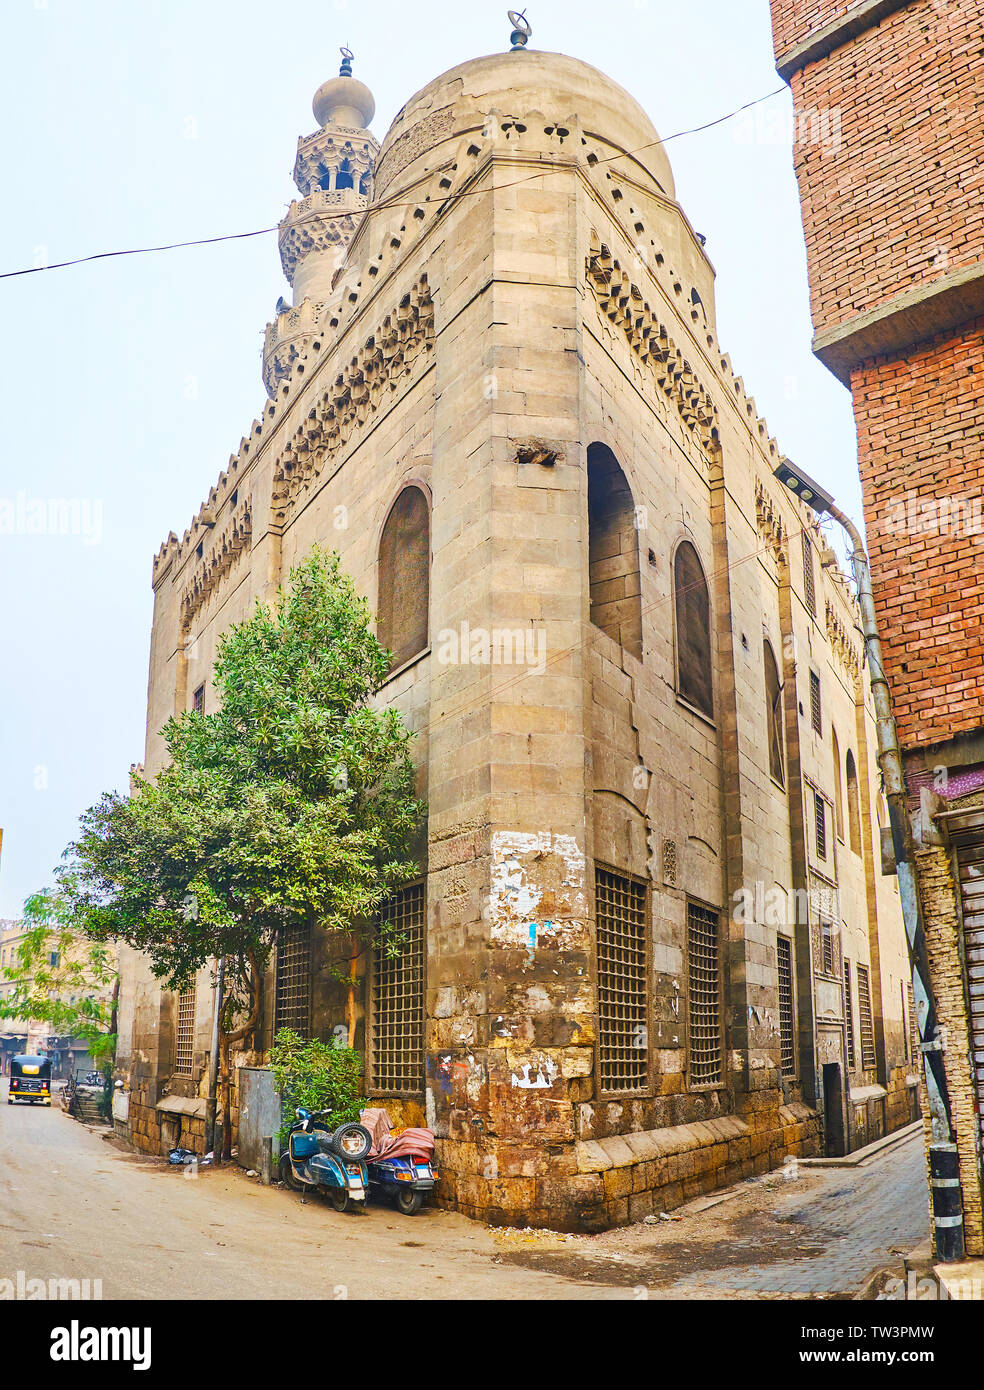 Passeggiata lungo El Darb El Ahmar street e osservare la pietra medievali moschea di Amir Qijmas al-Ishaqi, noto anche come Abou Heriba, Cairo islamico, Egitto Foto Stock